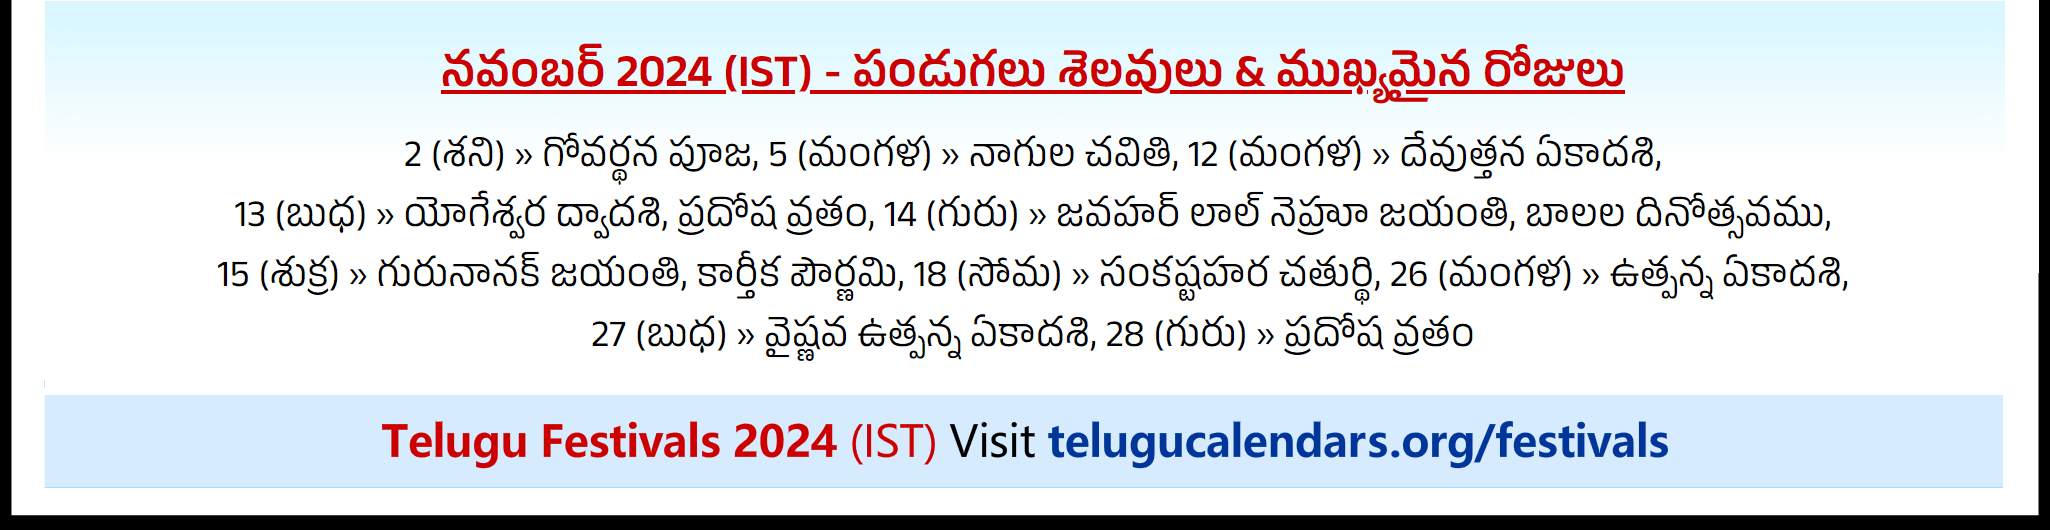 Telugu Festivals 2024 November Singapore